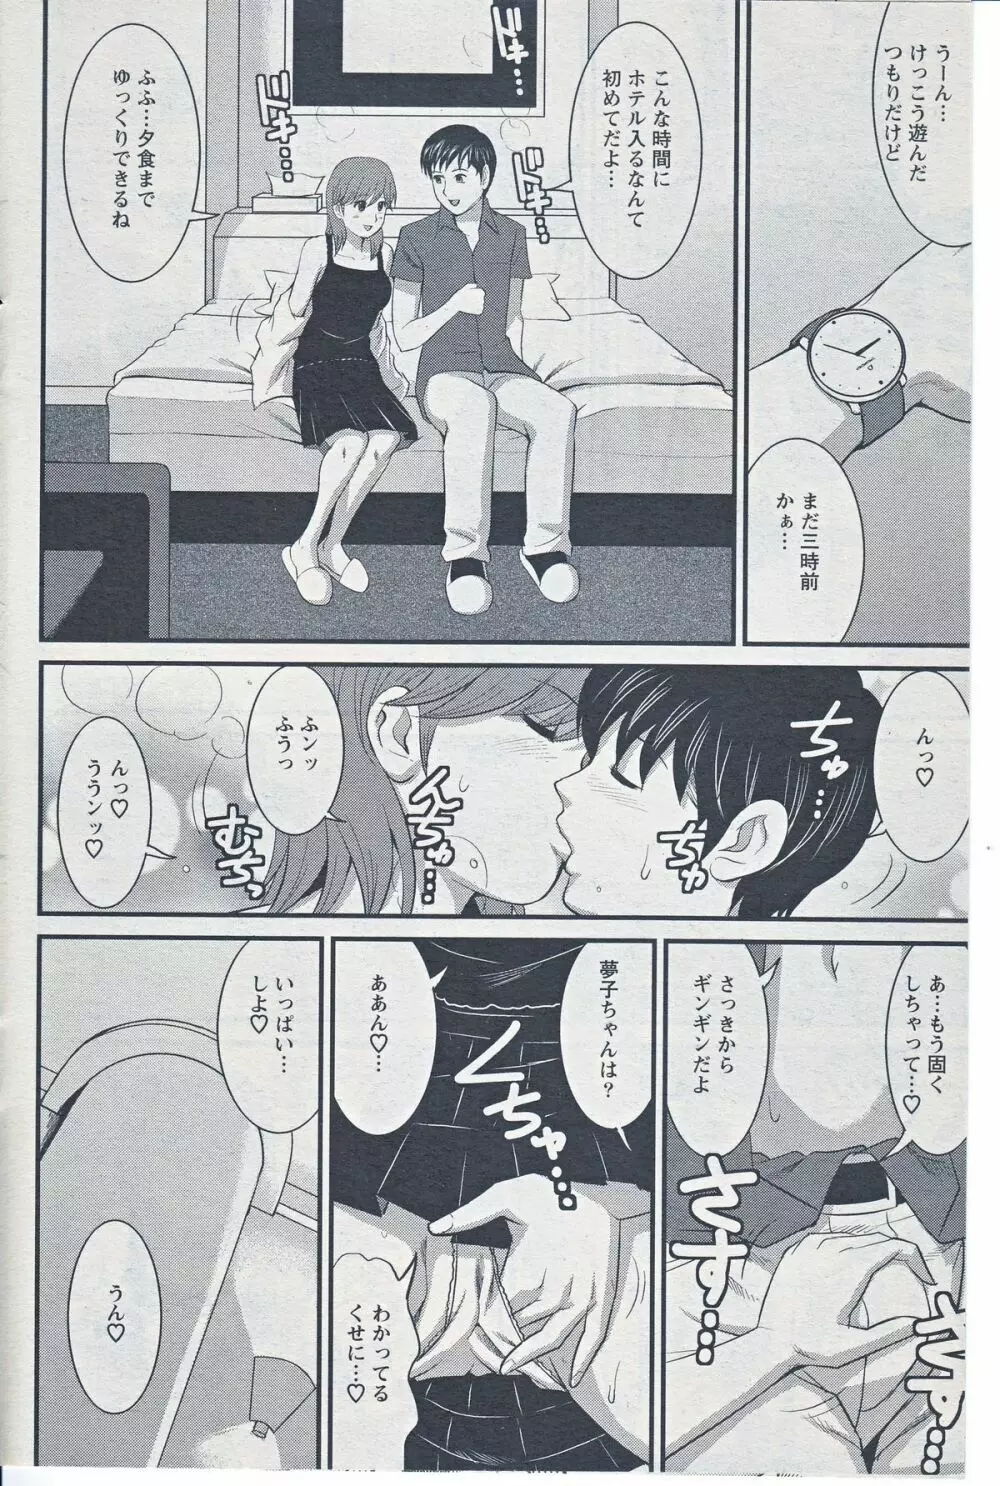 Haken no Muuko-san 20 8ページ